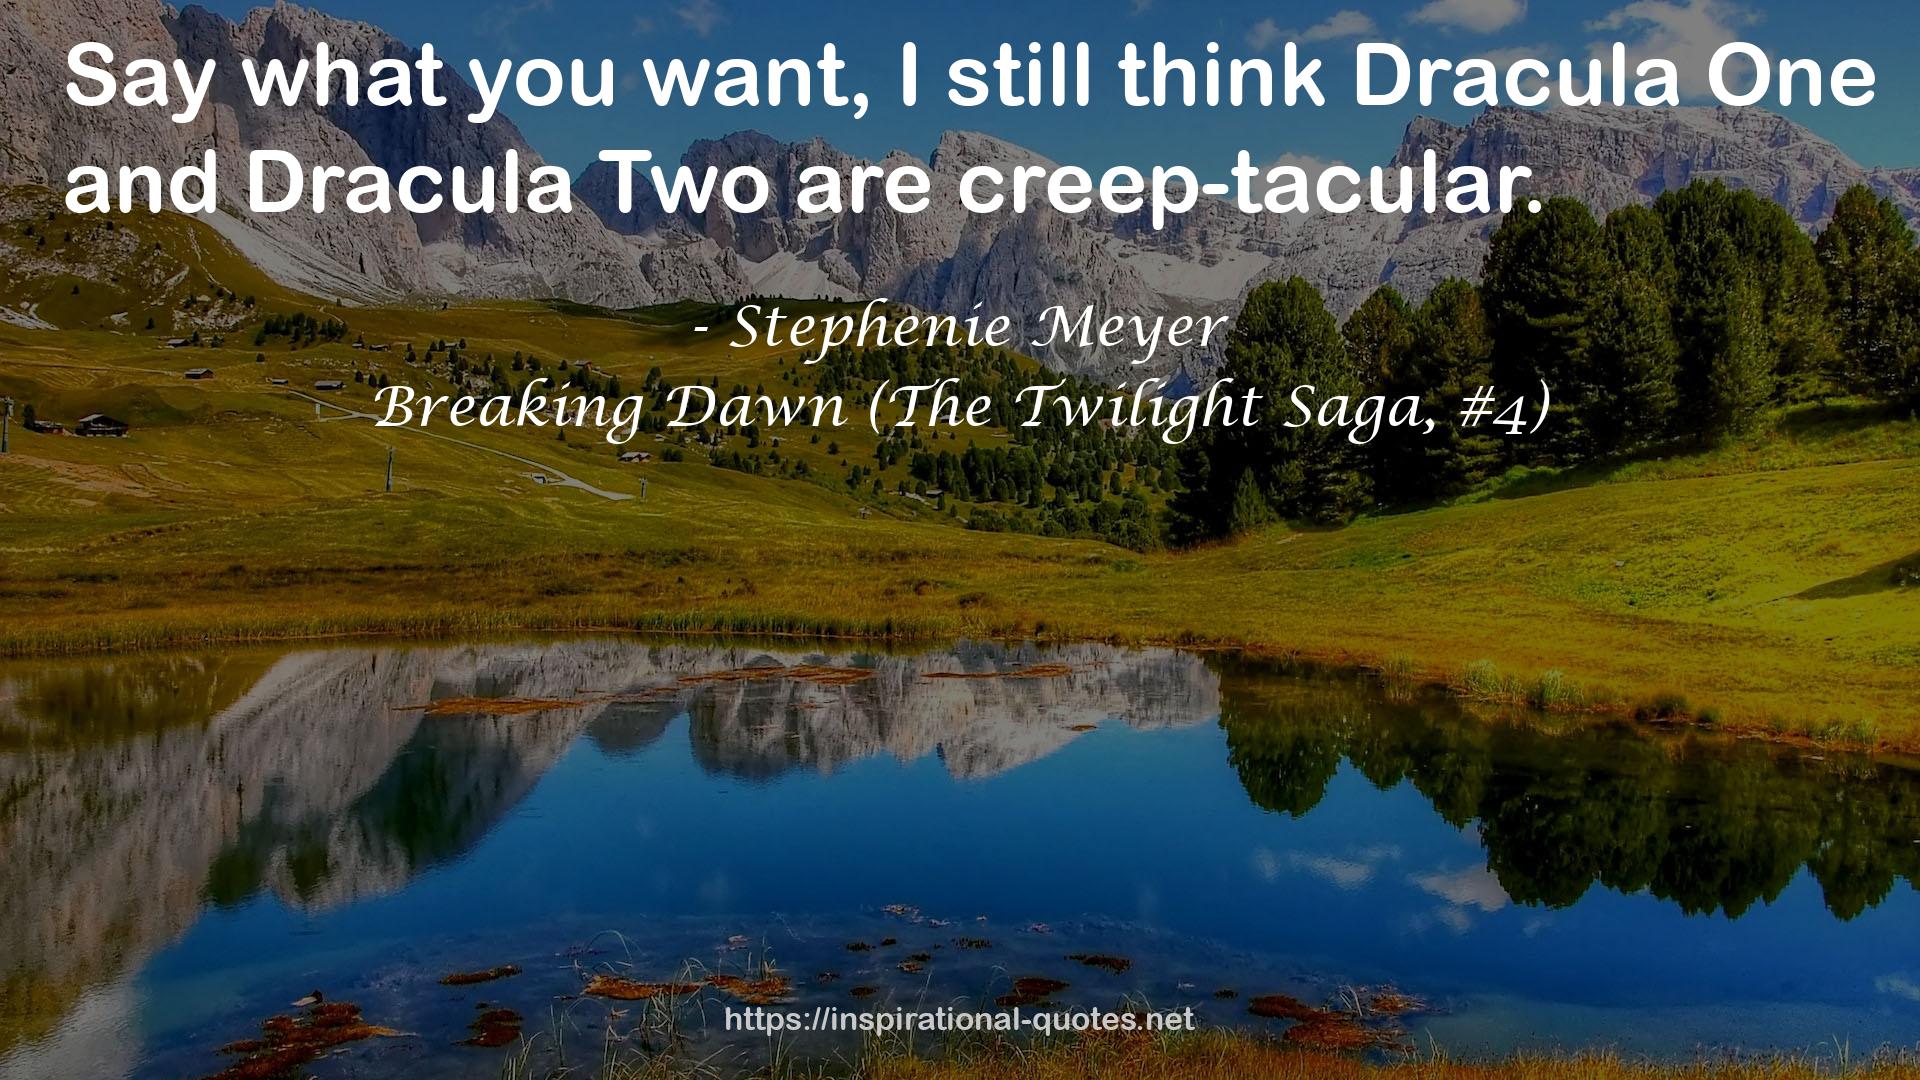 Breaking Dawn (The Twilight Saga, #4) QUOTES